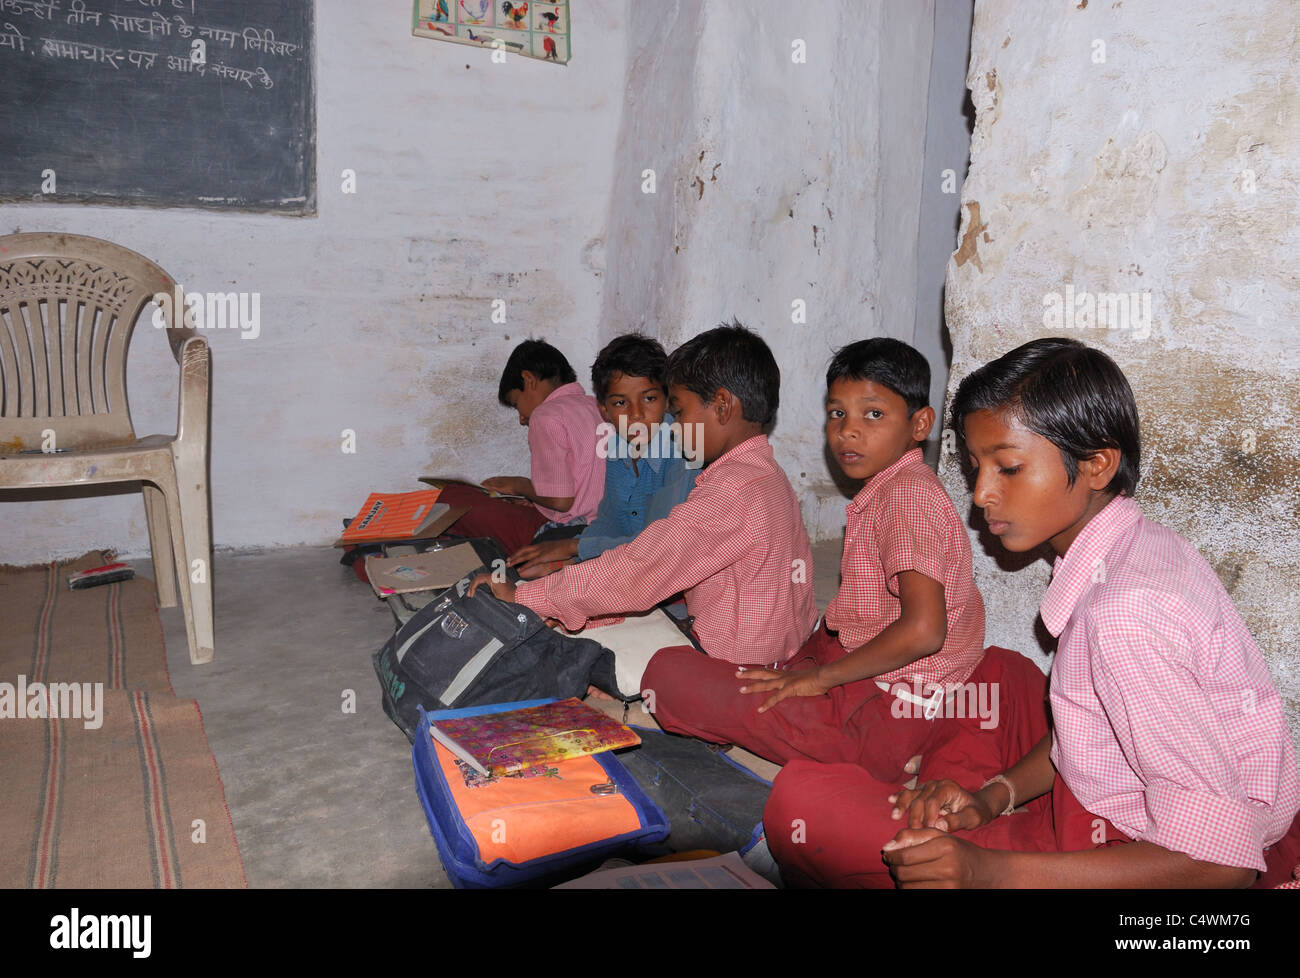 Typische armen Schule in Indien Stockfoto